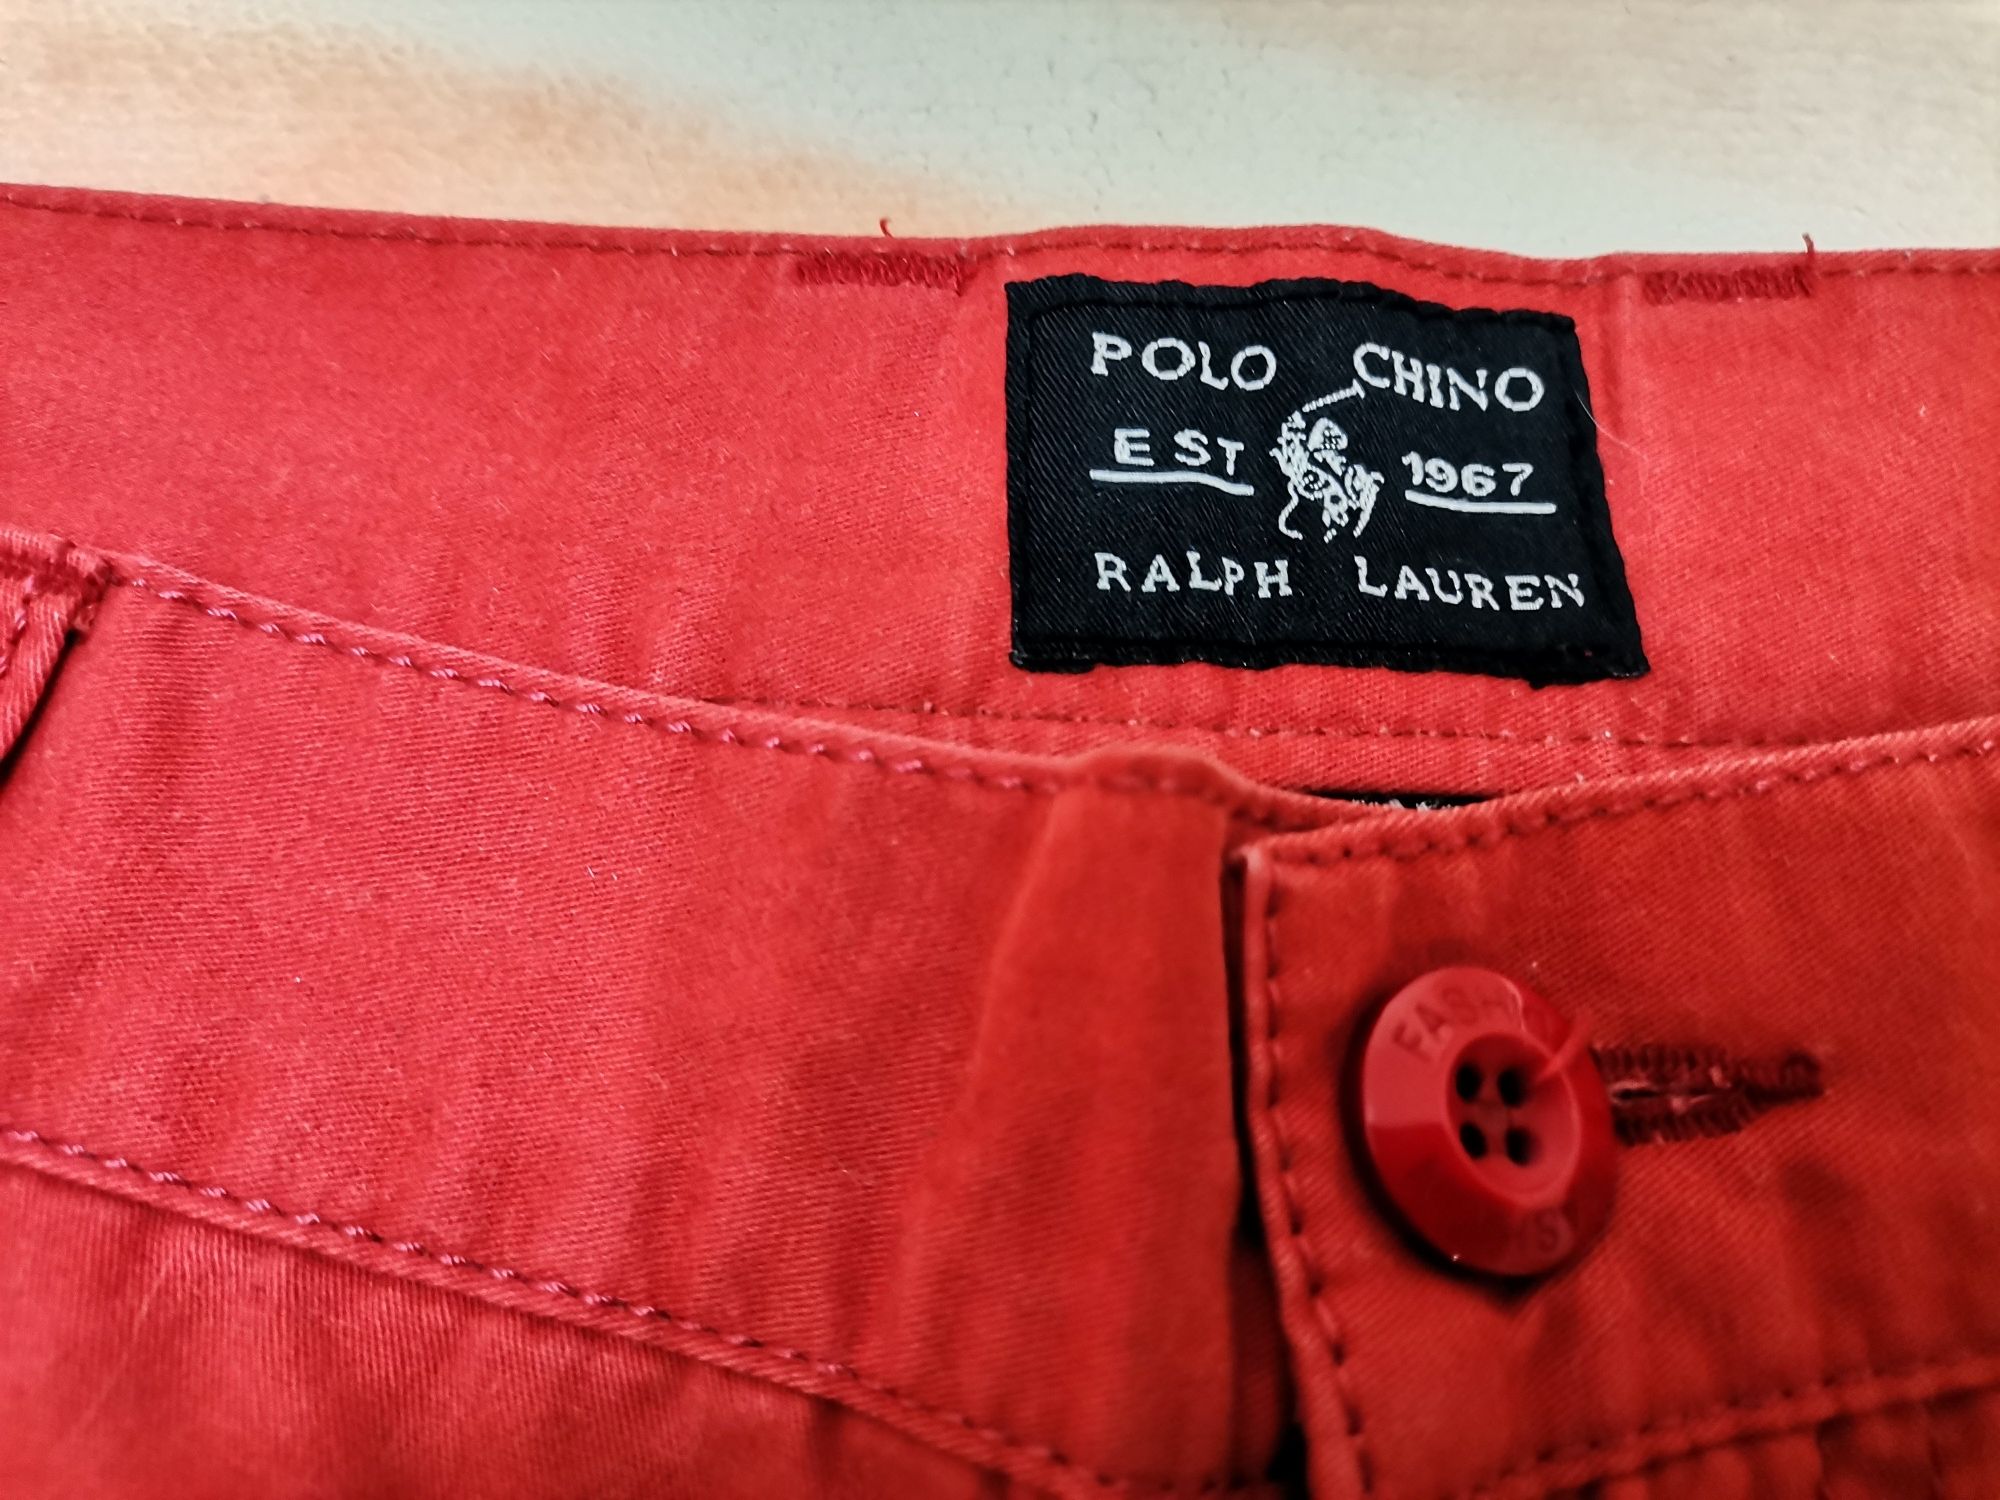 Pantaloni scurți Polo Chino, Ralph Lauren, marimea 36